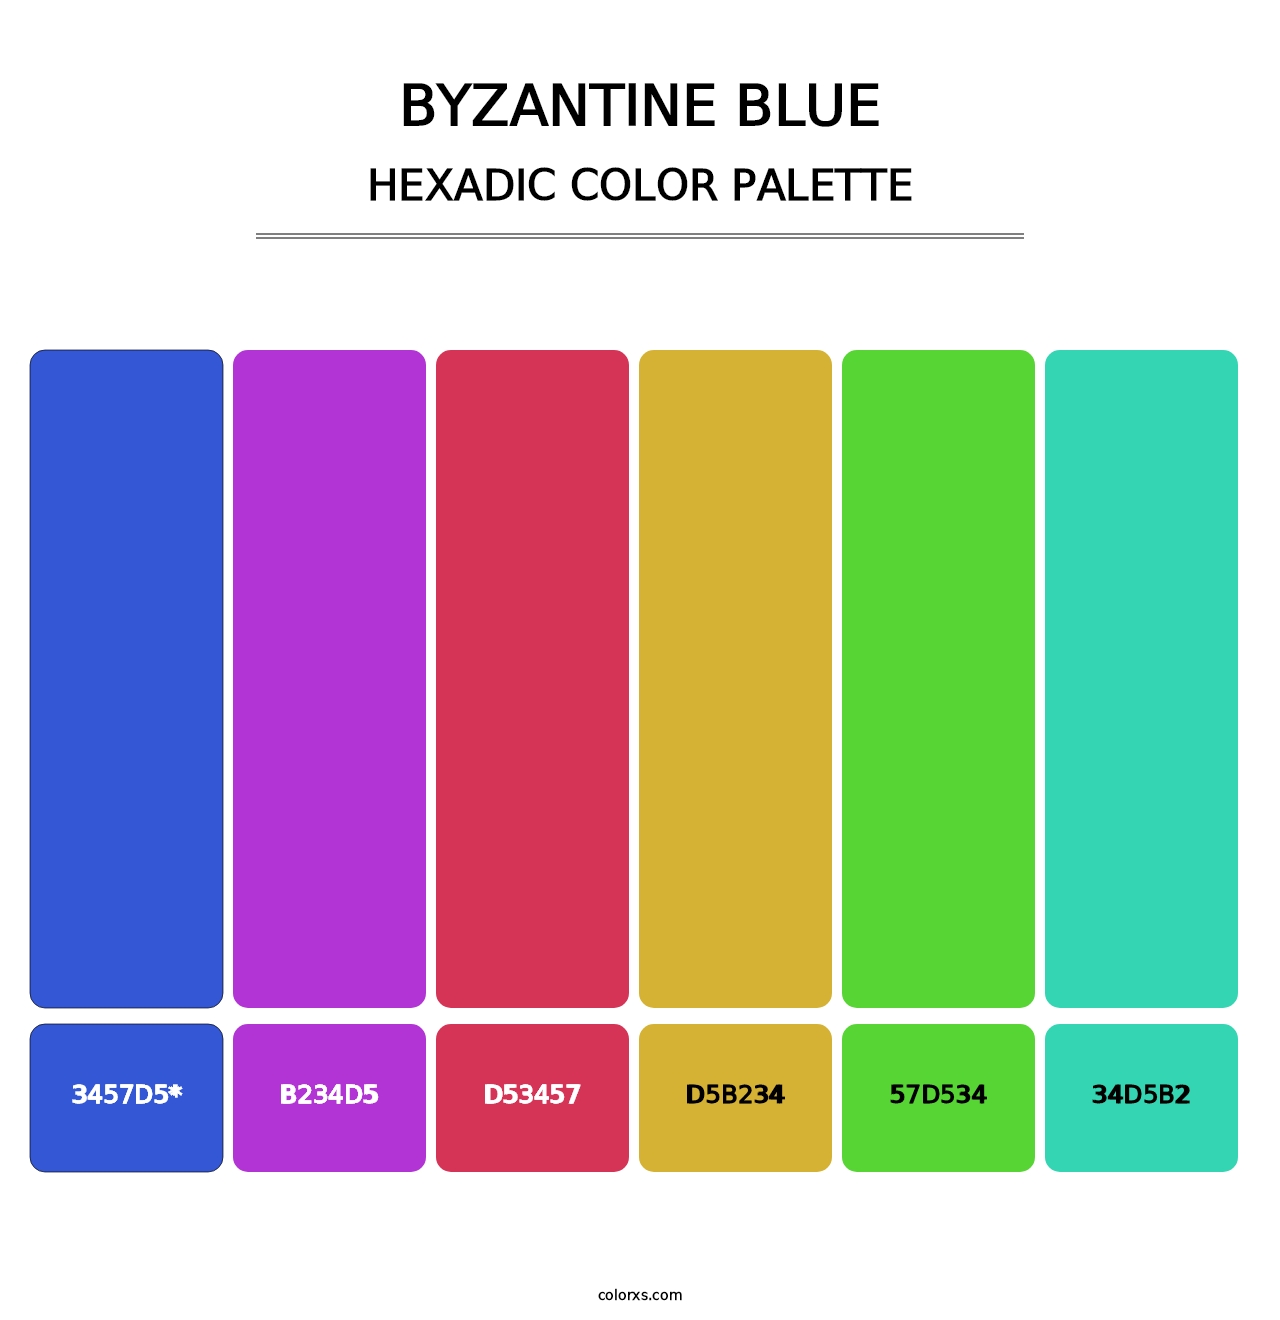 Byzantine Blue - Hexadic Color Palette